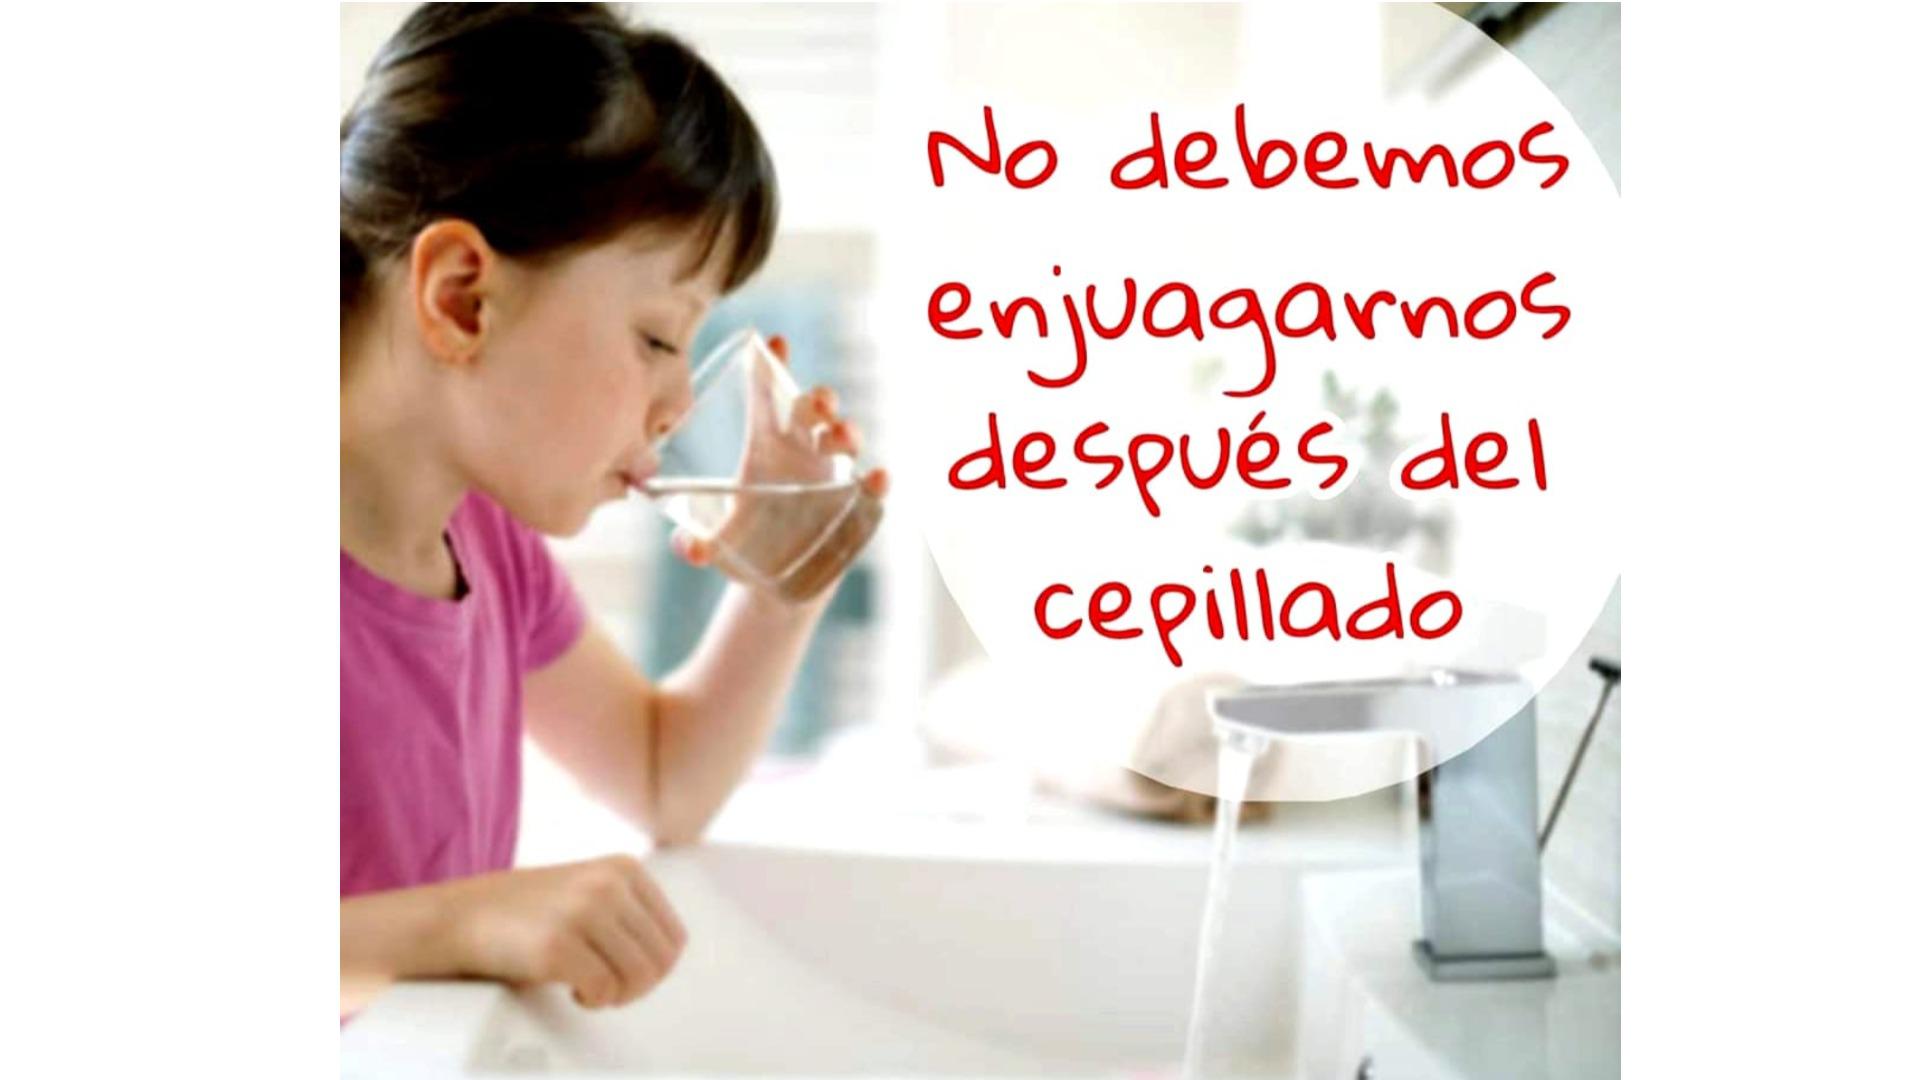 Dental Little Kids - Clínicas Dentales San Juan De Lurigancho 969 330 888